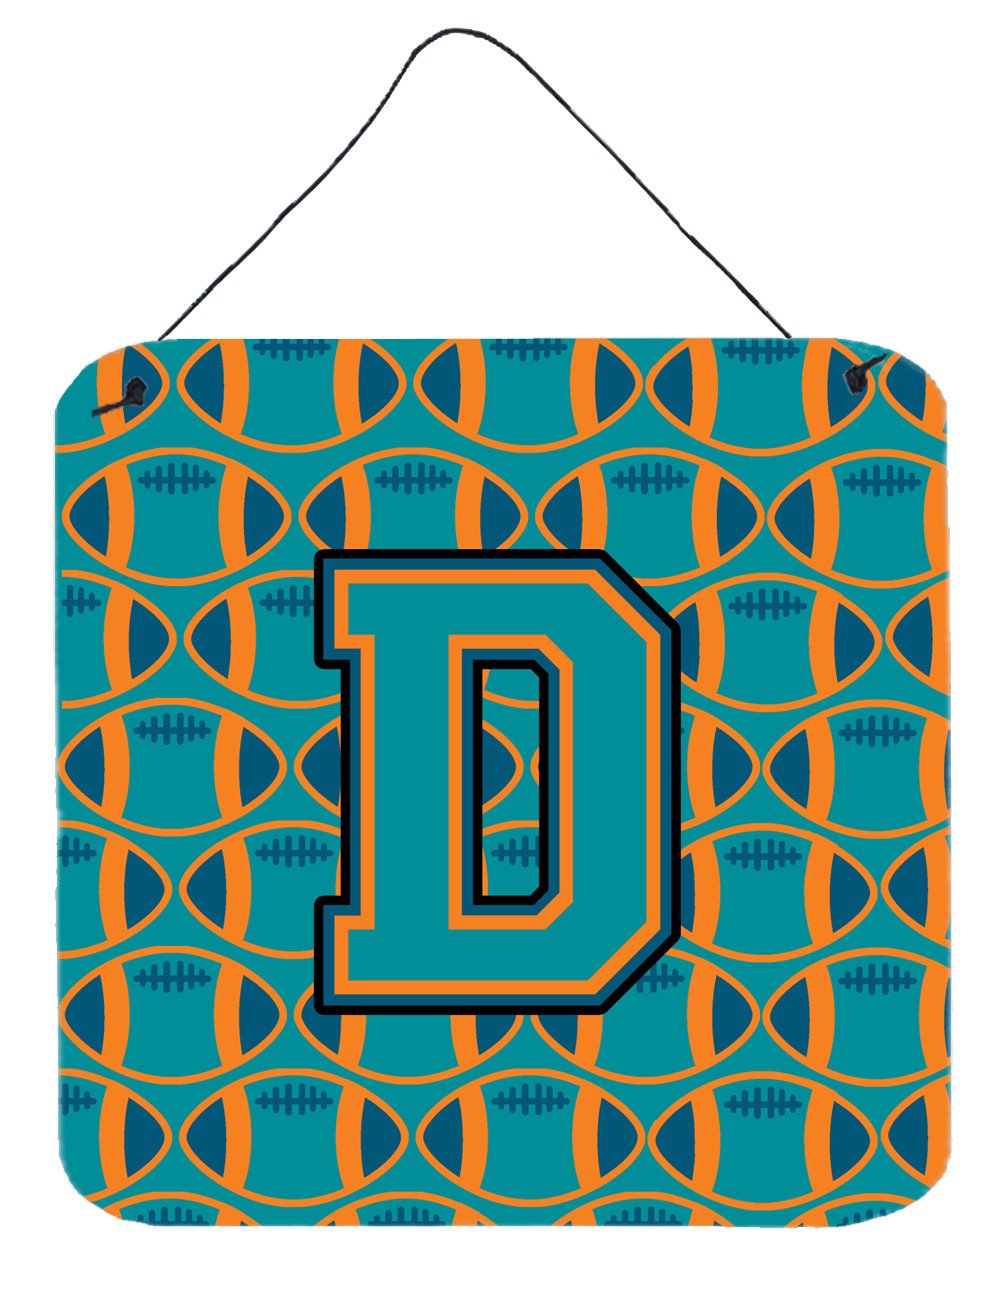 Letter D Football Aqua, Orange and Marine Blue Wall or Door Hanging Prints CJ1063-DDS66 by Caroline's Treasures